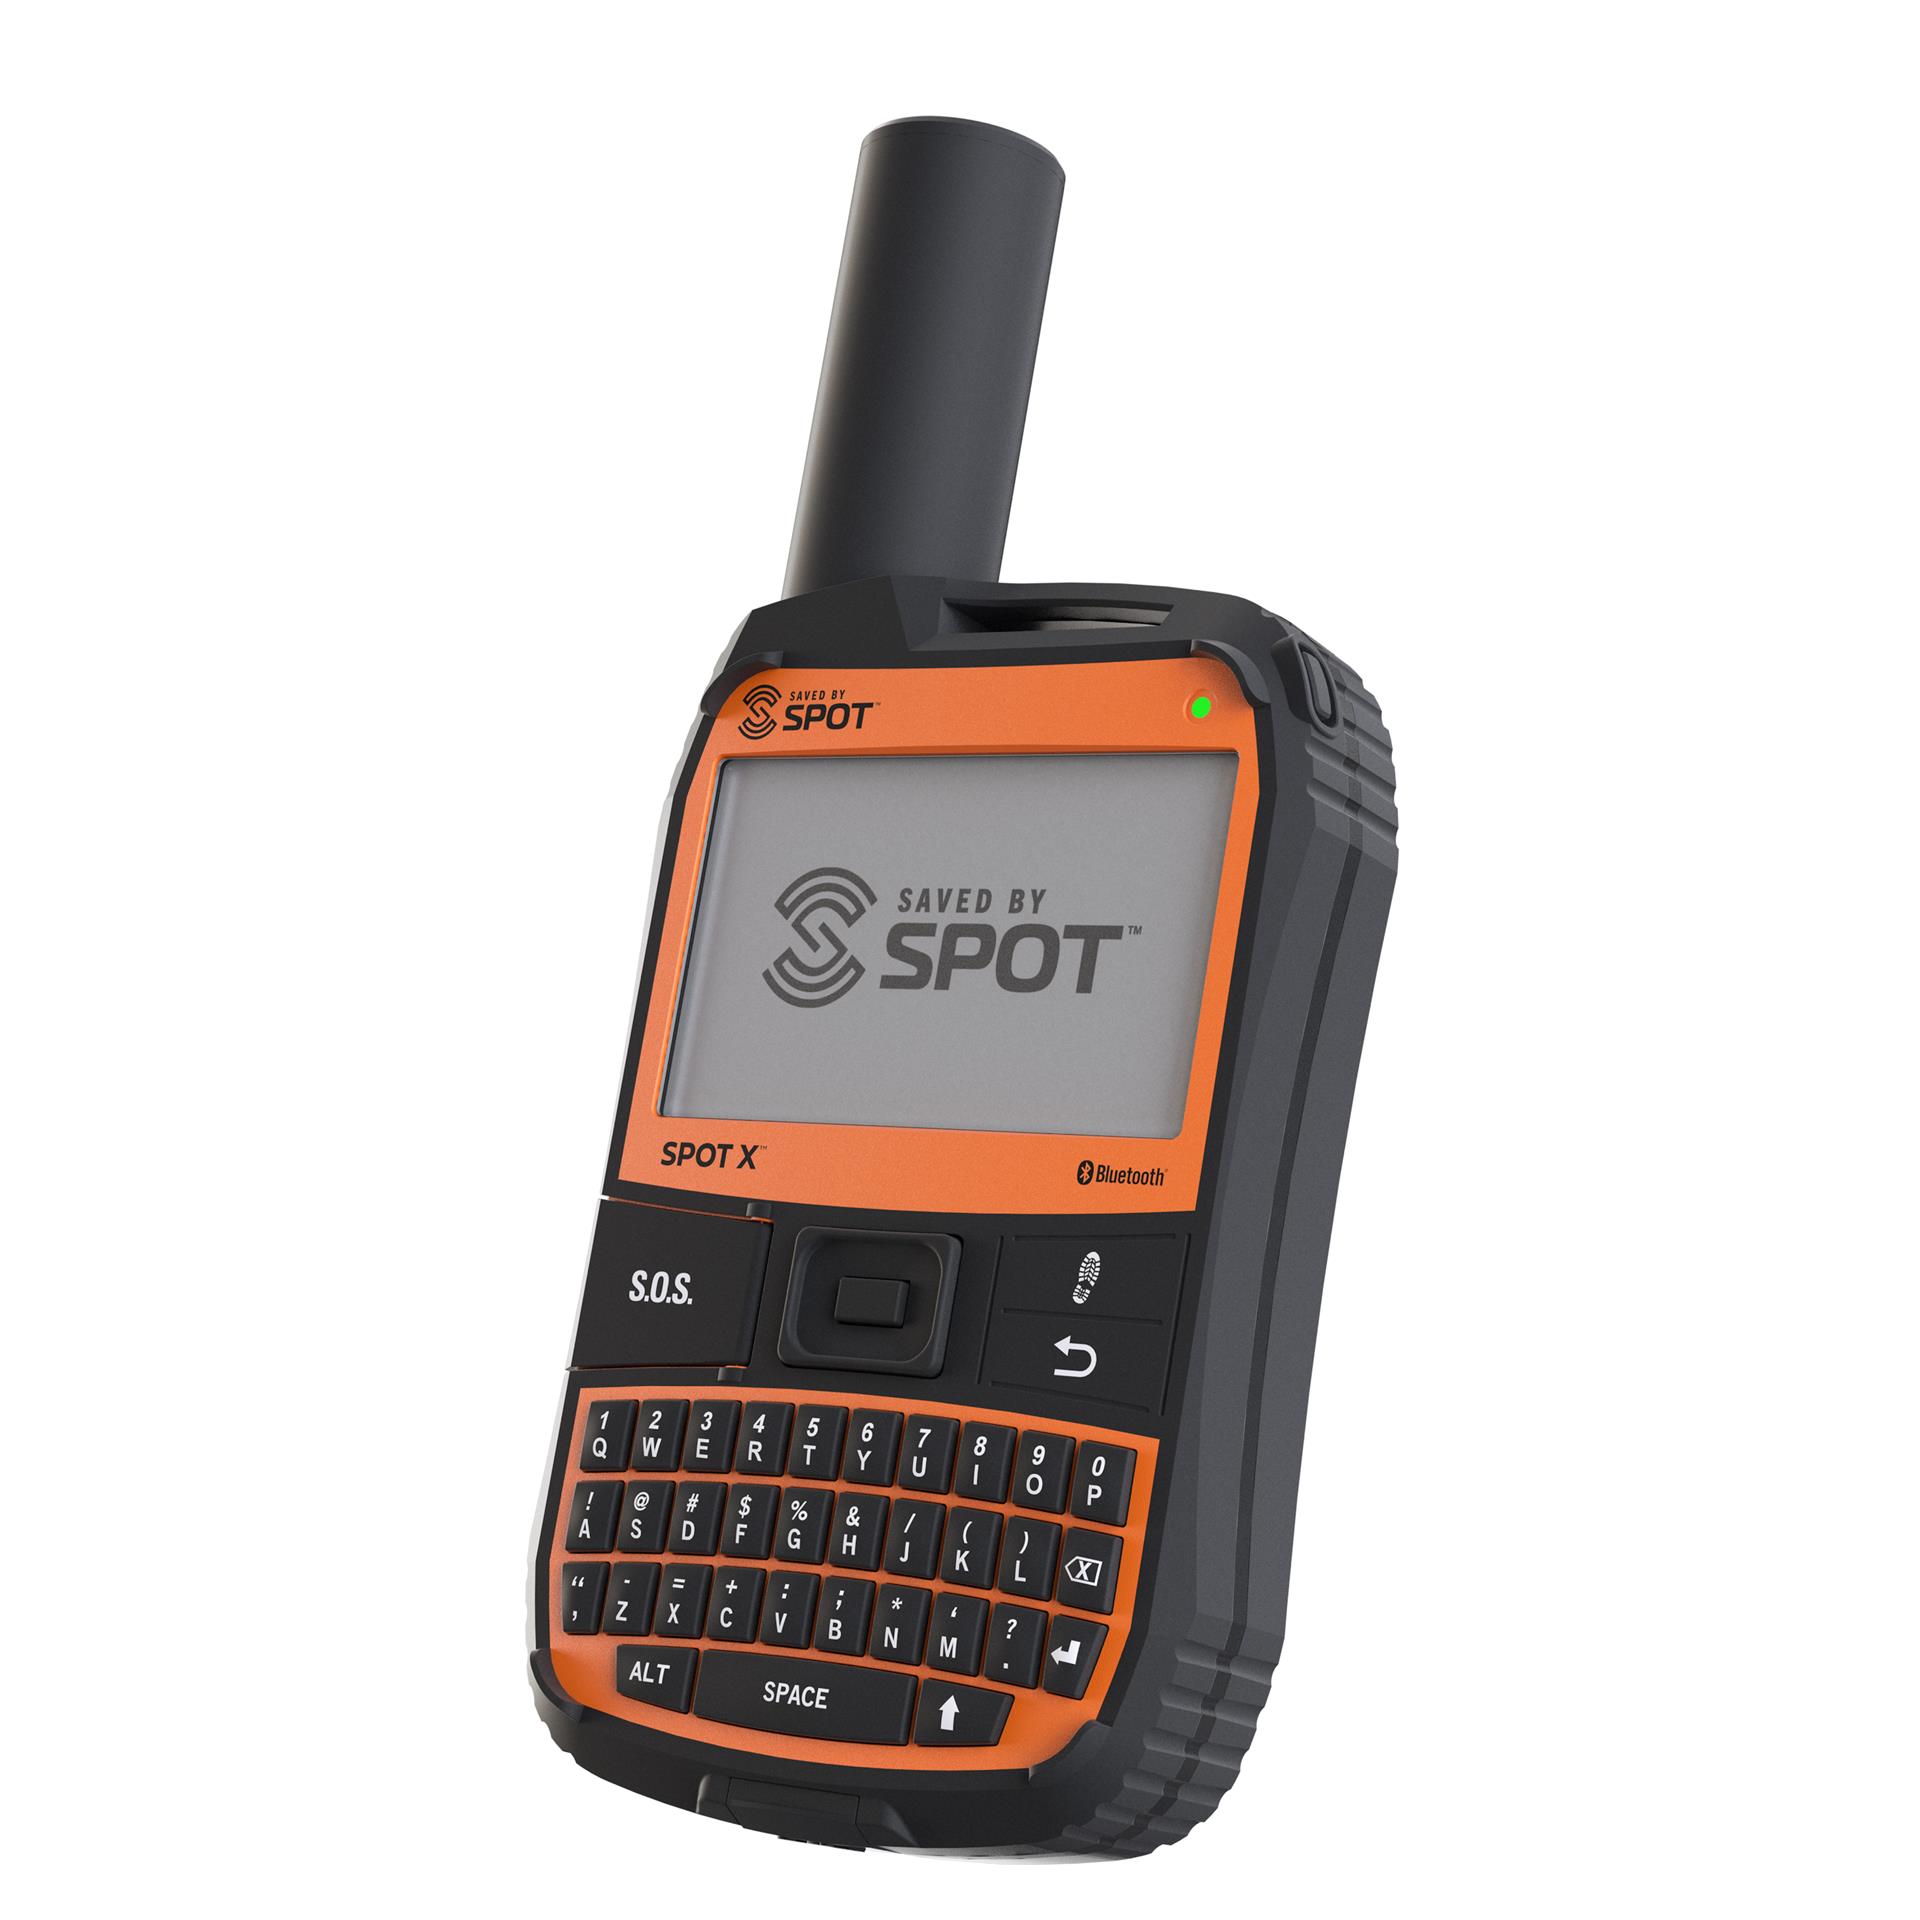 SPOTX Bluetooth 2-Way satellite messenger 